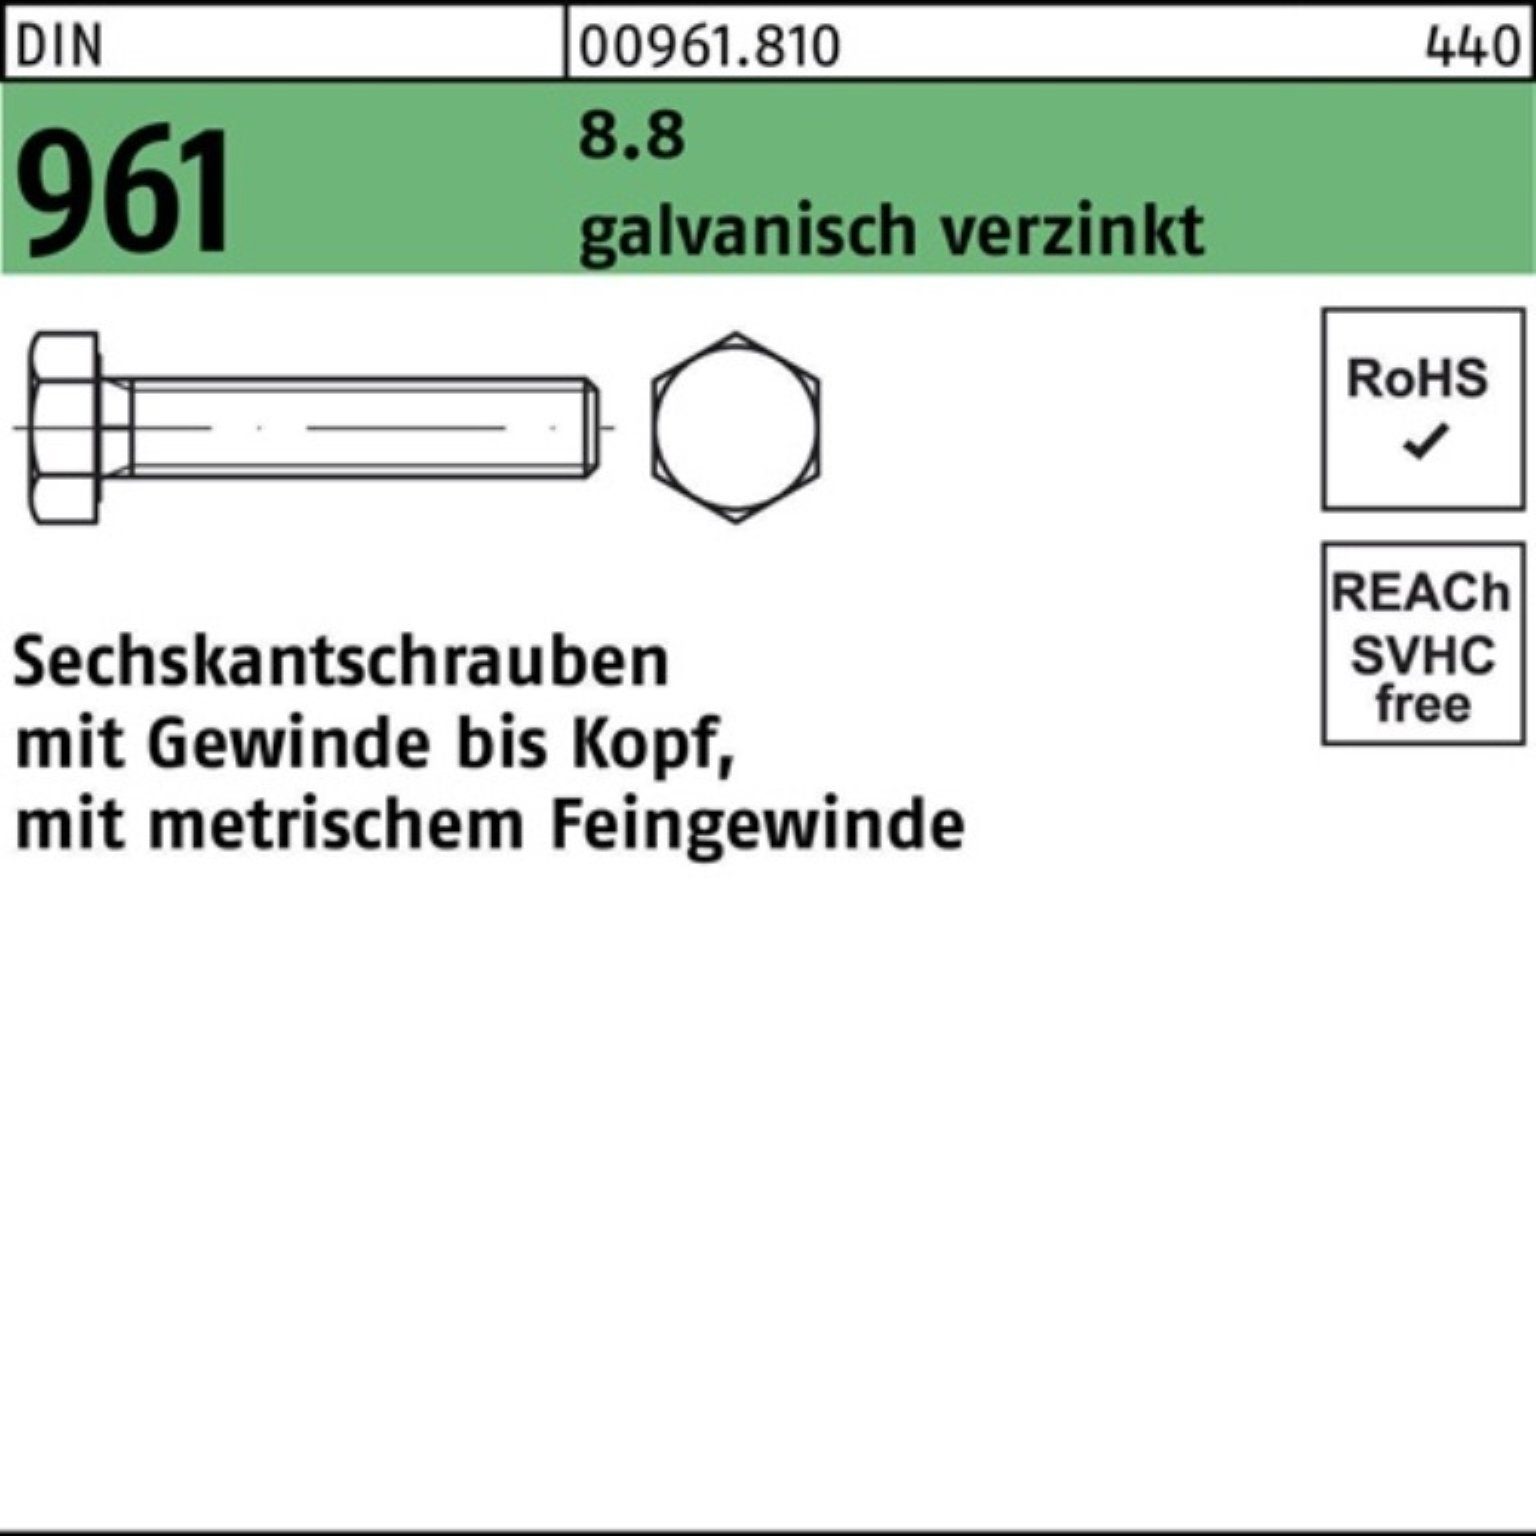 Sechskantschraube Sechskantschraube 10 961 DIN 100er VG Reyher M10x1,25x 8.8 40 galv.verz. Pack